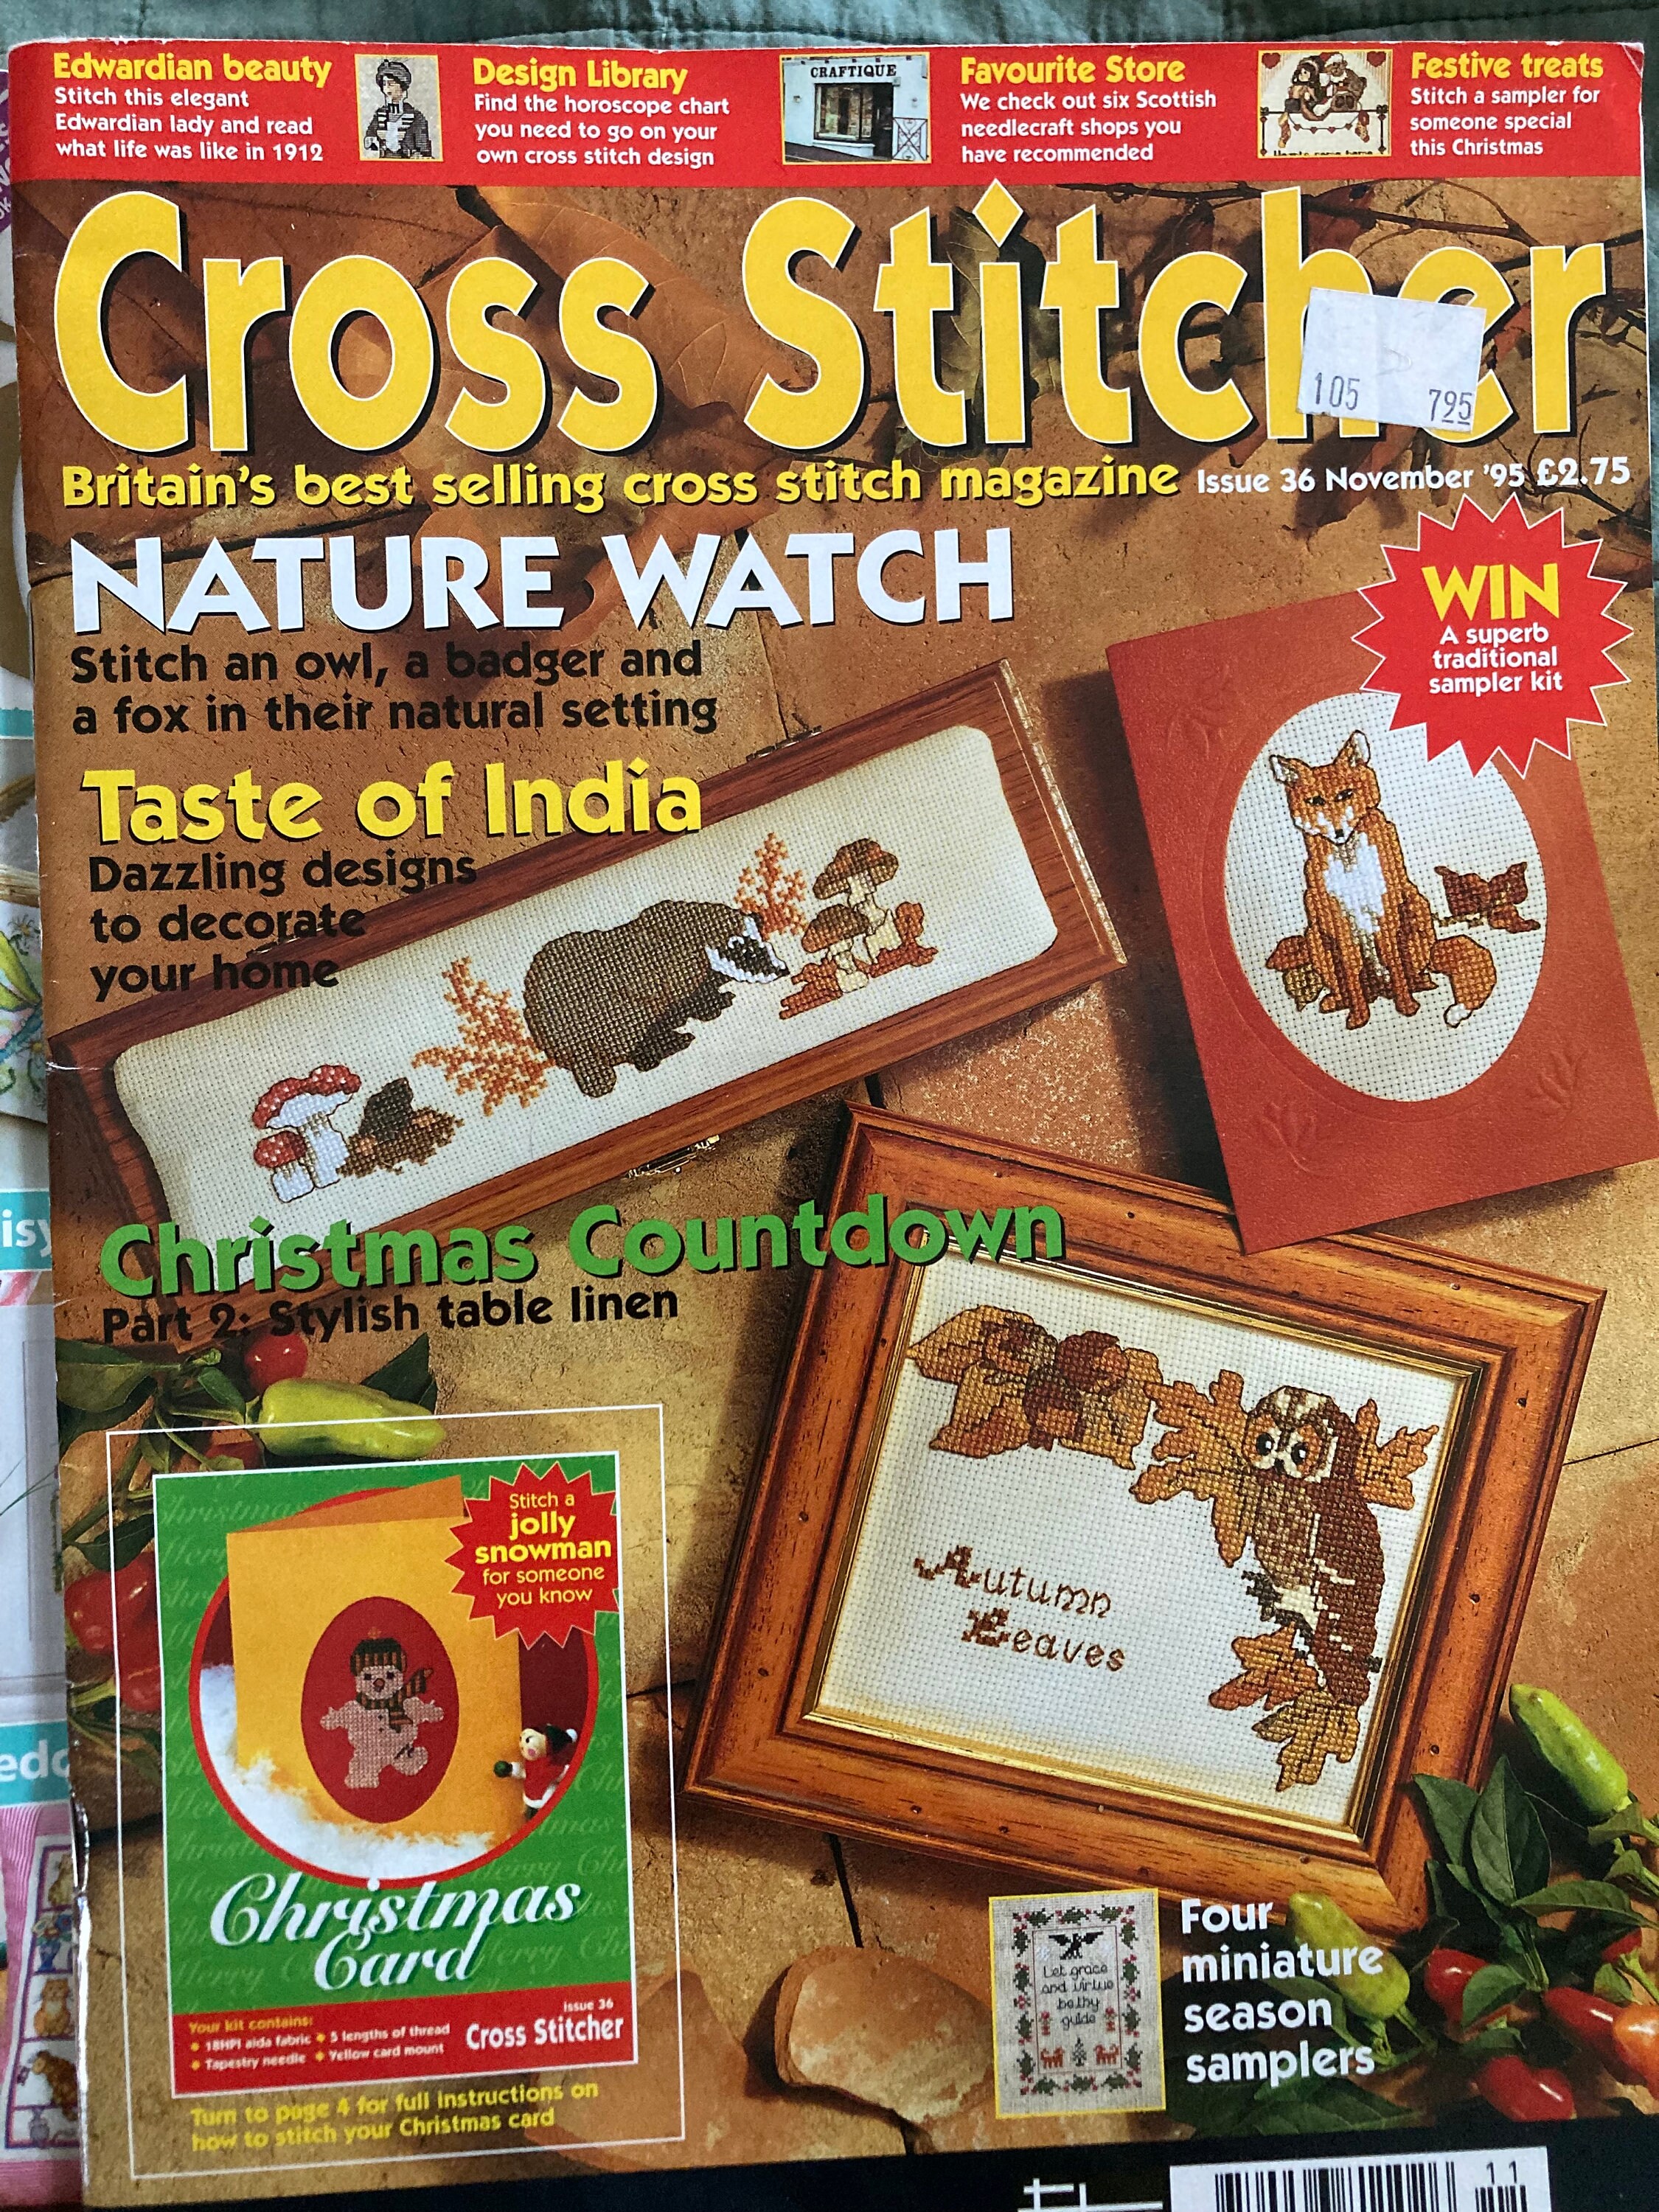 Enjoy Cross Stitch Magazine Issue 23 Spring 2020.